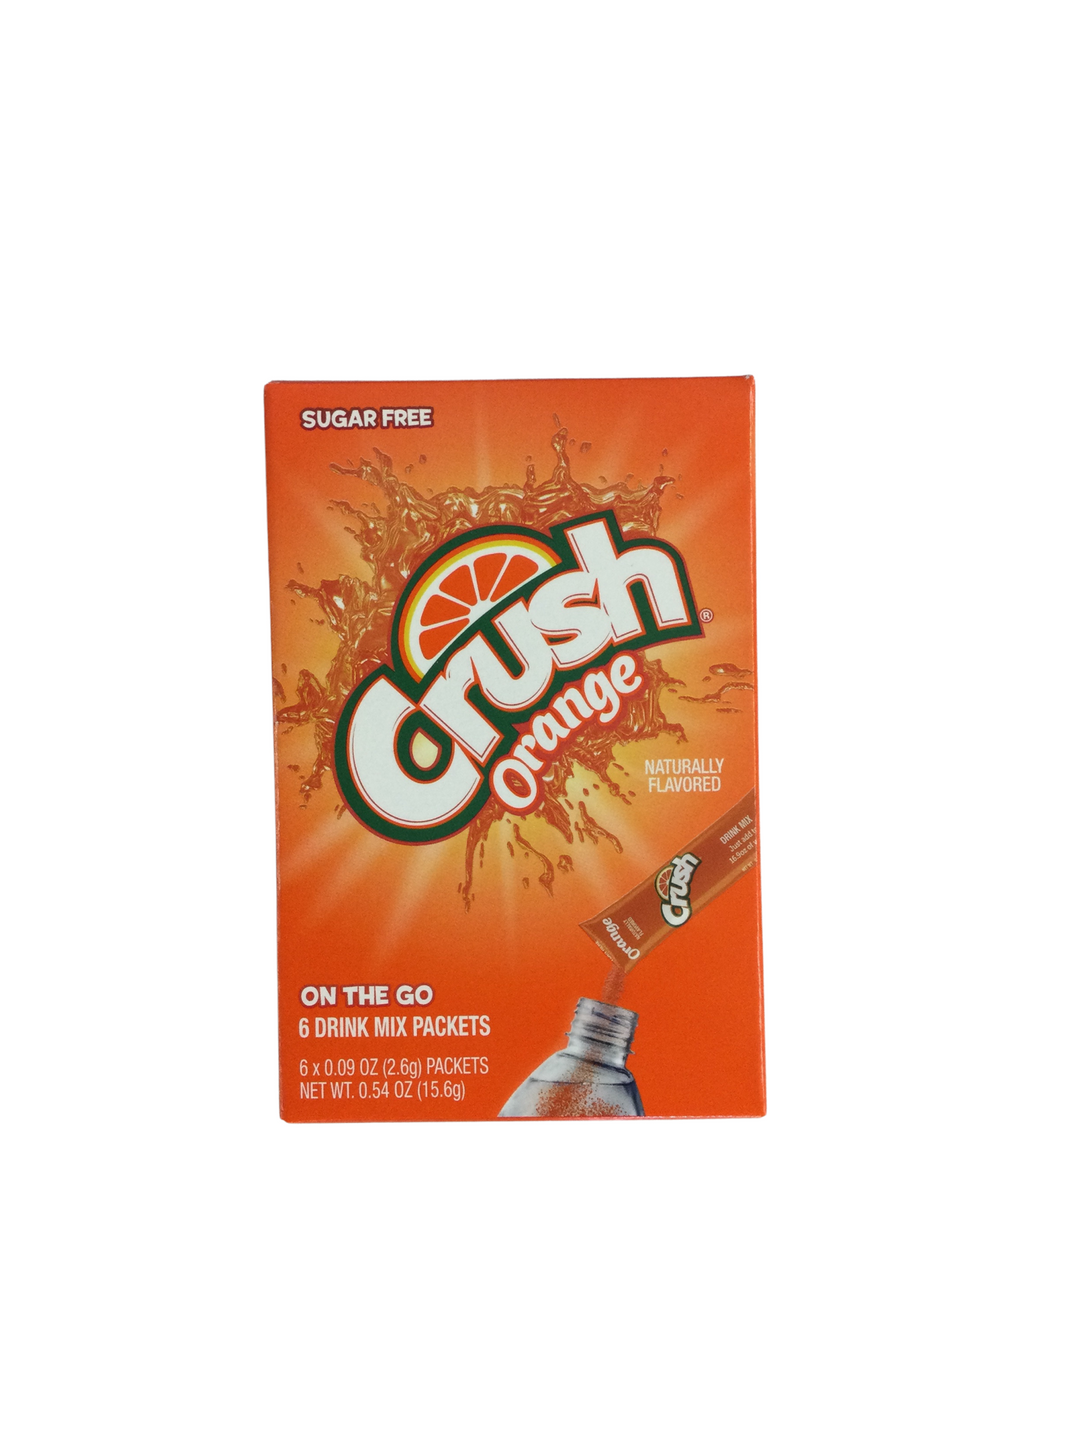 Orange Crush Drink Mix